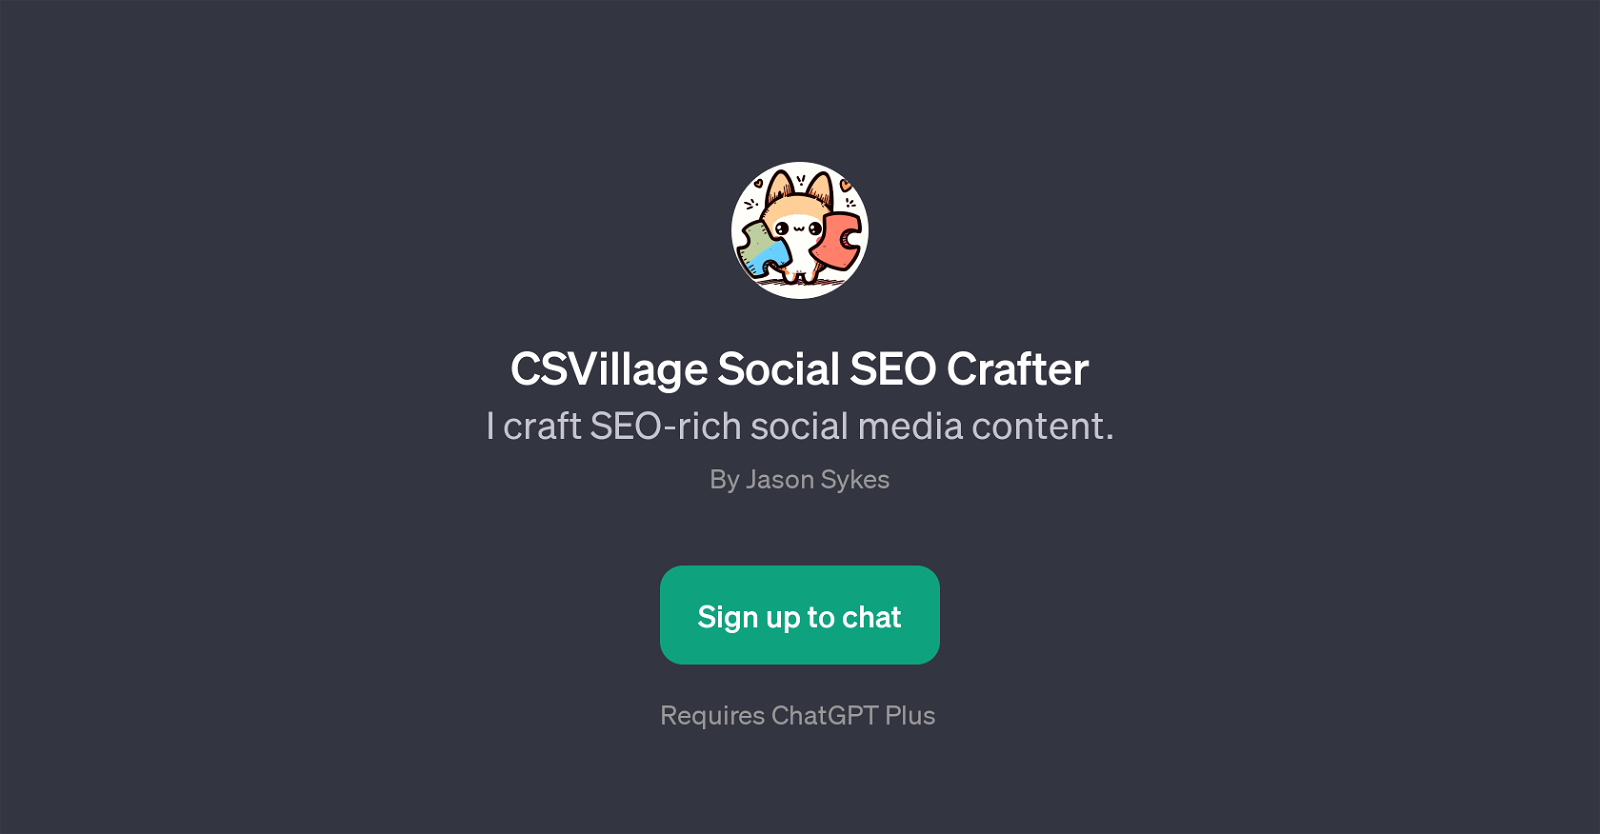 CSVillage Social SEO Crafter website